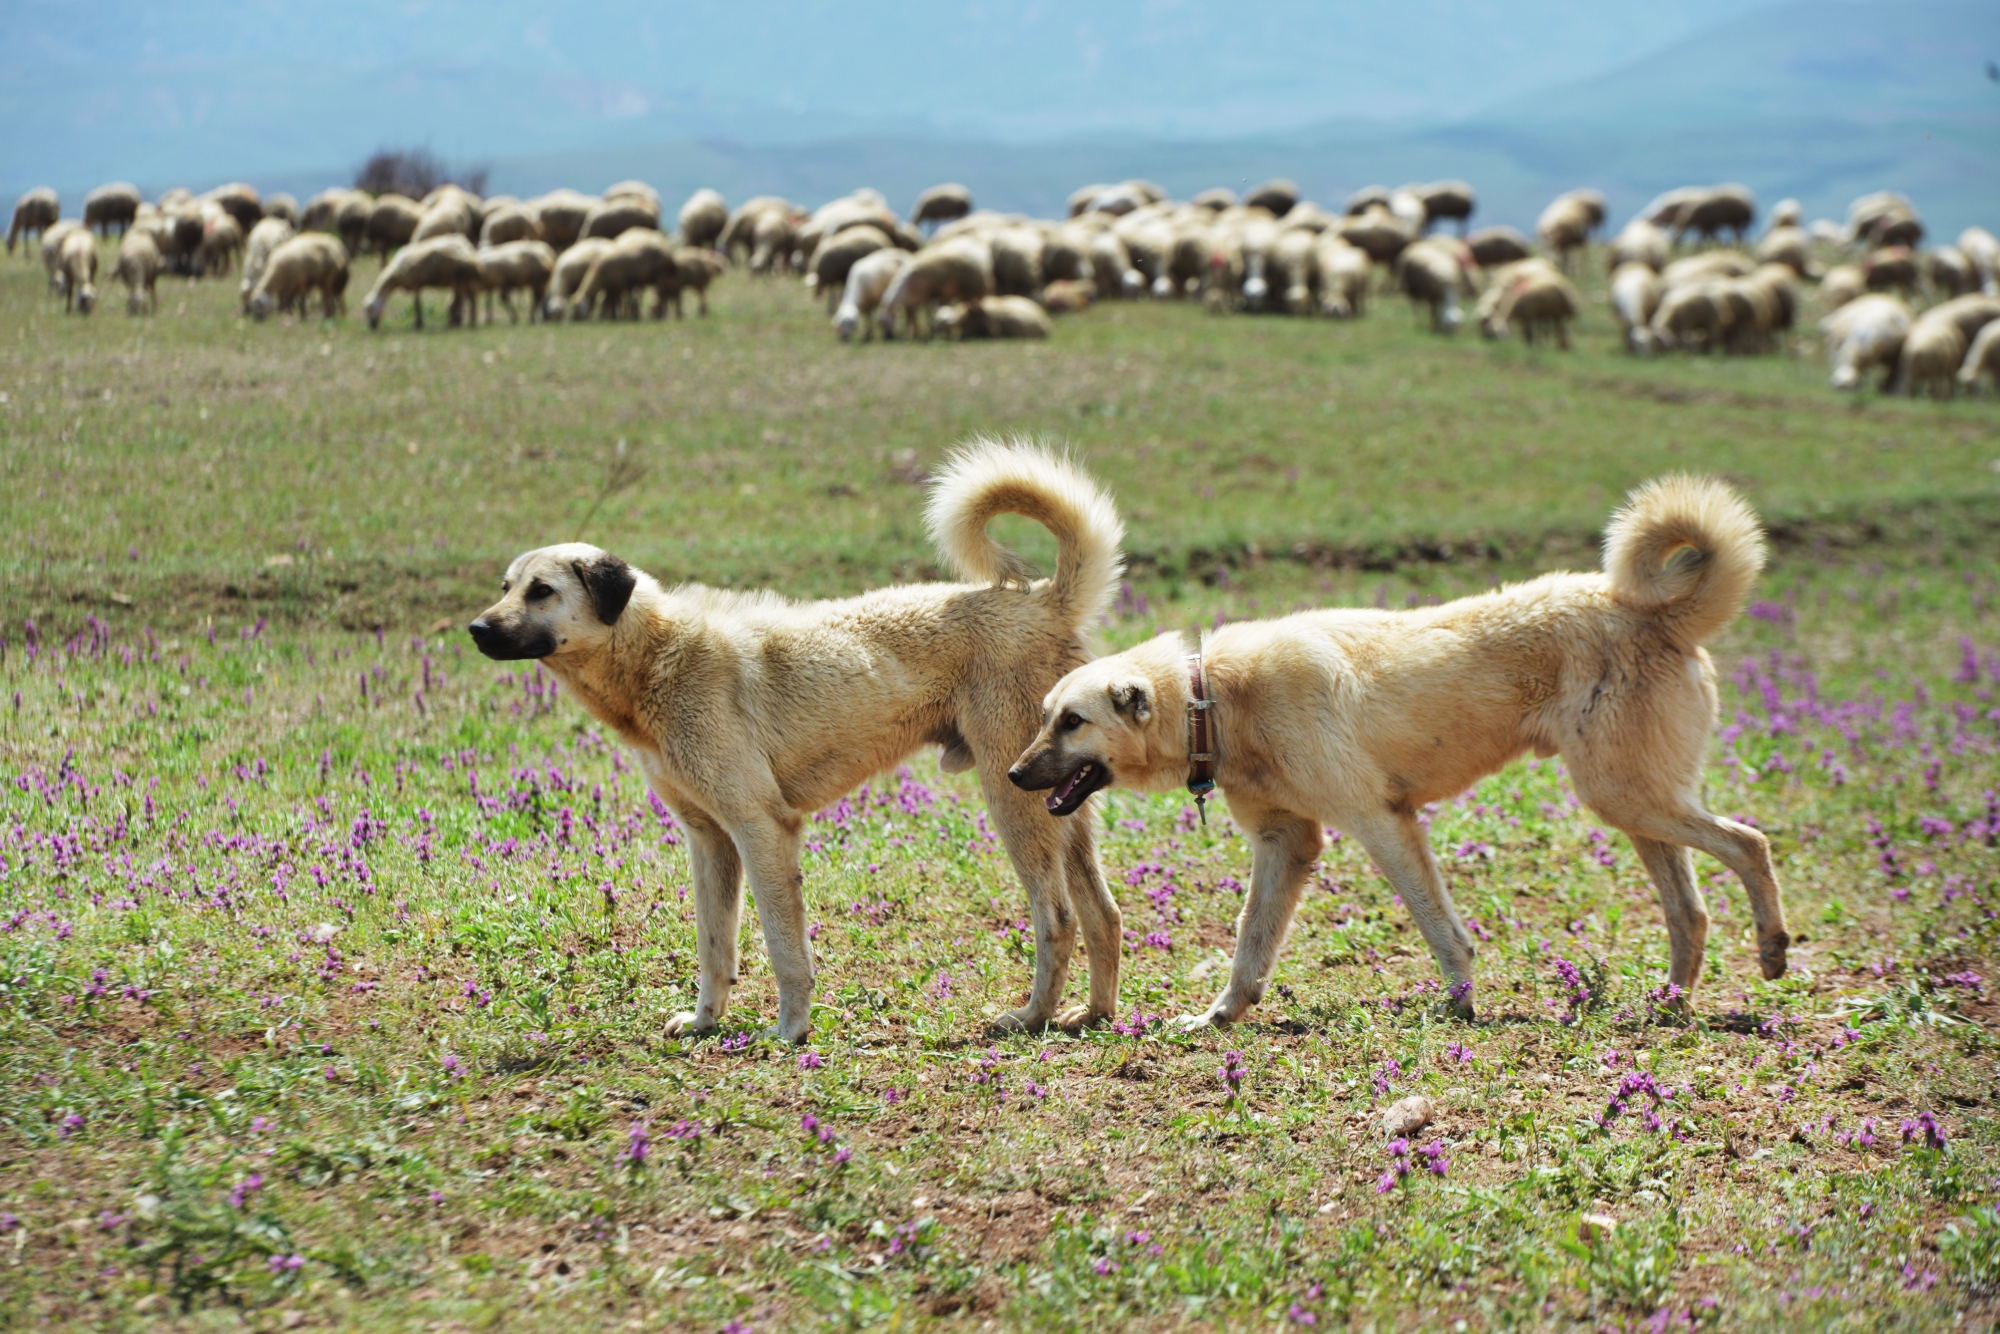 20180721sa0732-turkish-kangal-anatolian-shepherd-livestock-guarding-dogs-shutterstock_662051851.jpg?w=2000